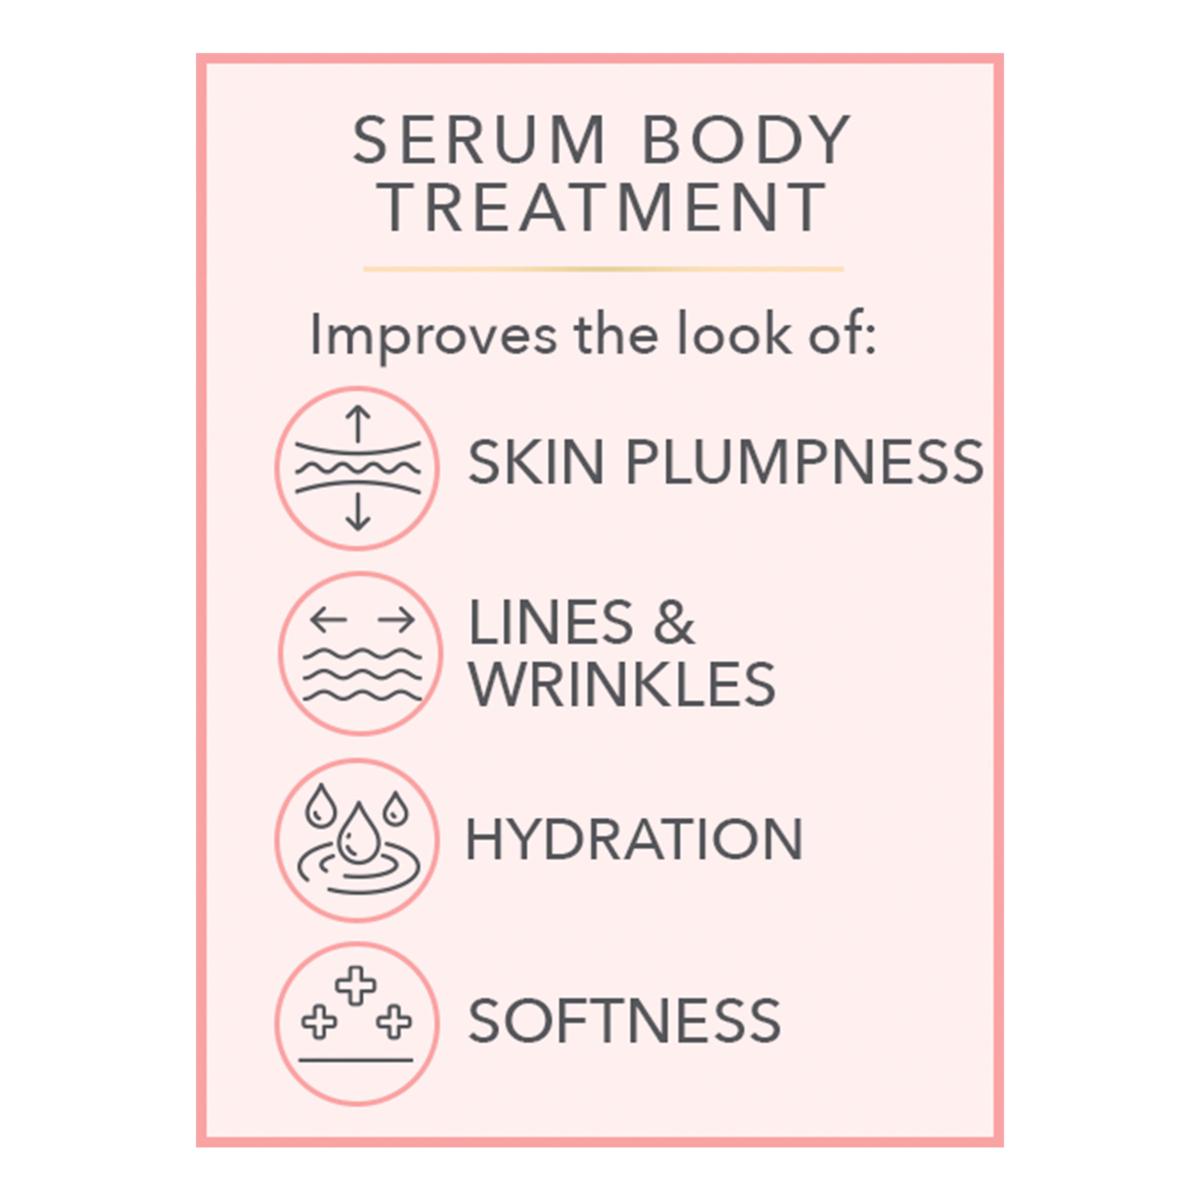 SkinFirm Serum Body Treatment